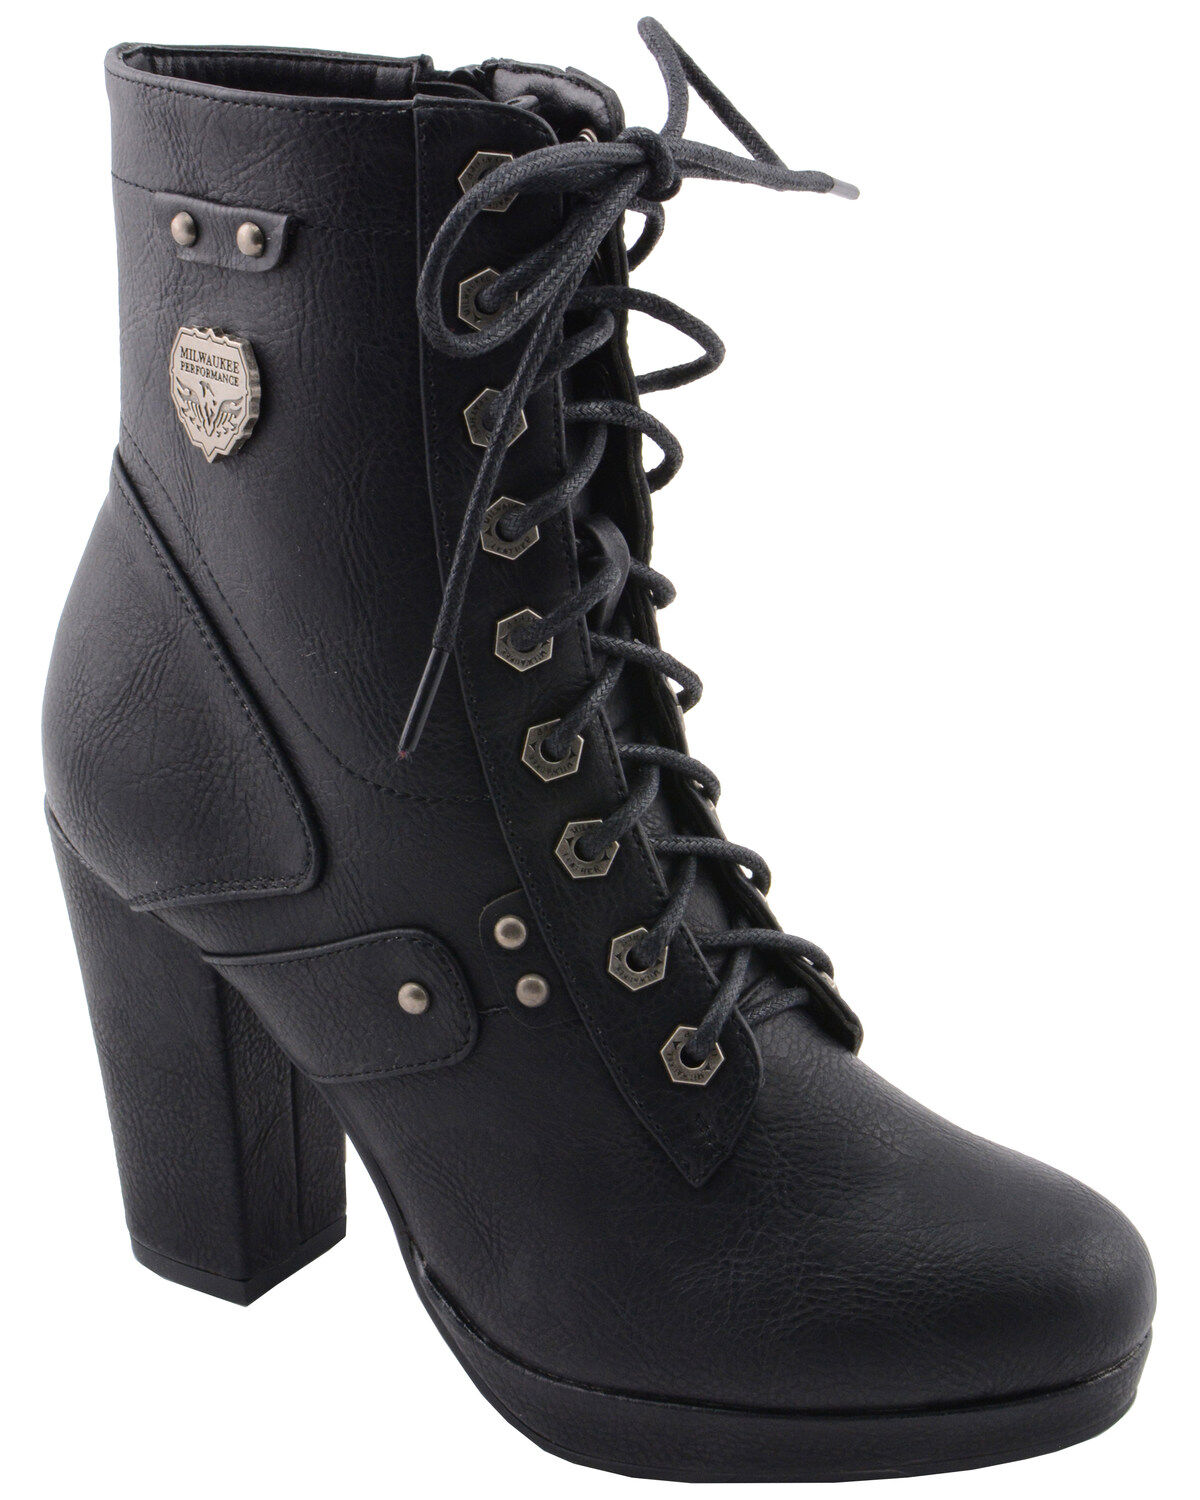 black platform boots for women